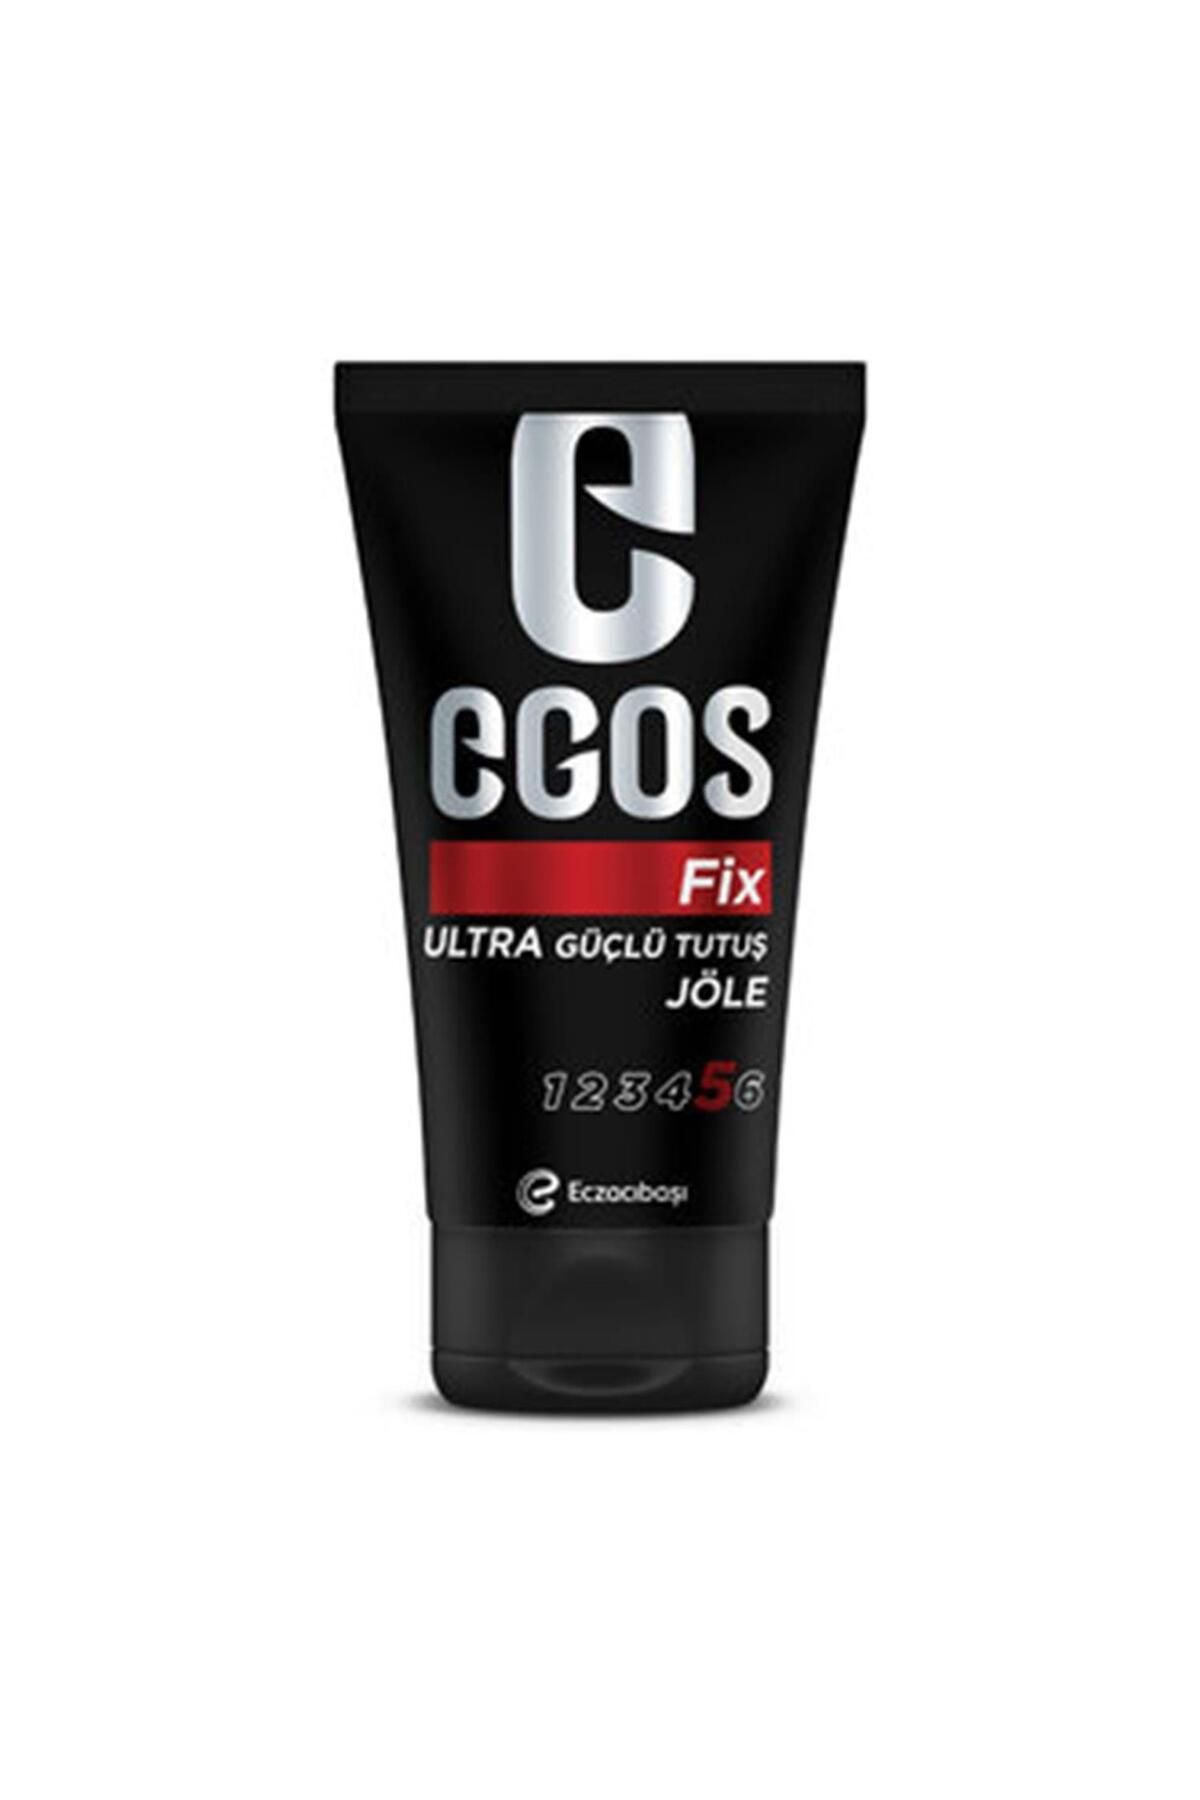 Egos Jöle 150 ml No: 5 Ultra Güçlü Tutuş // Fix